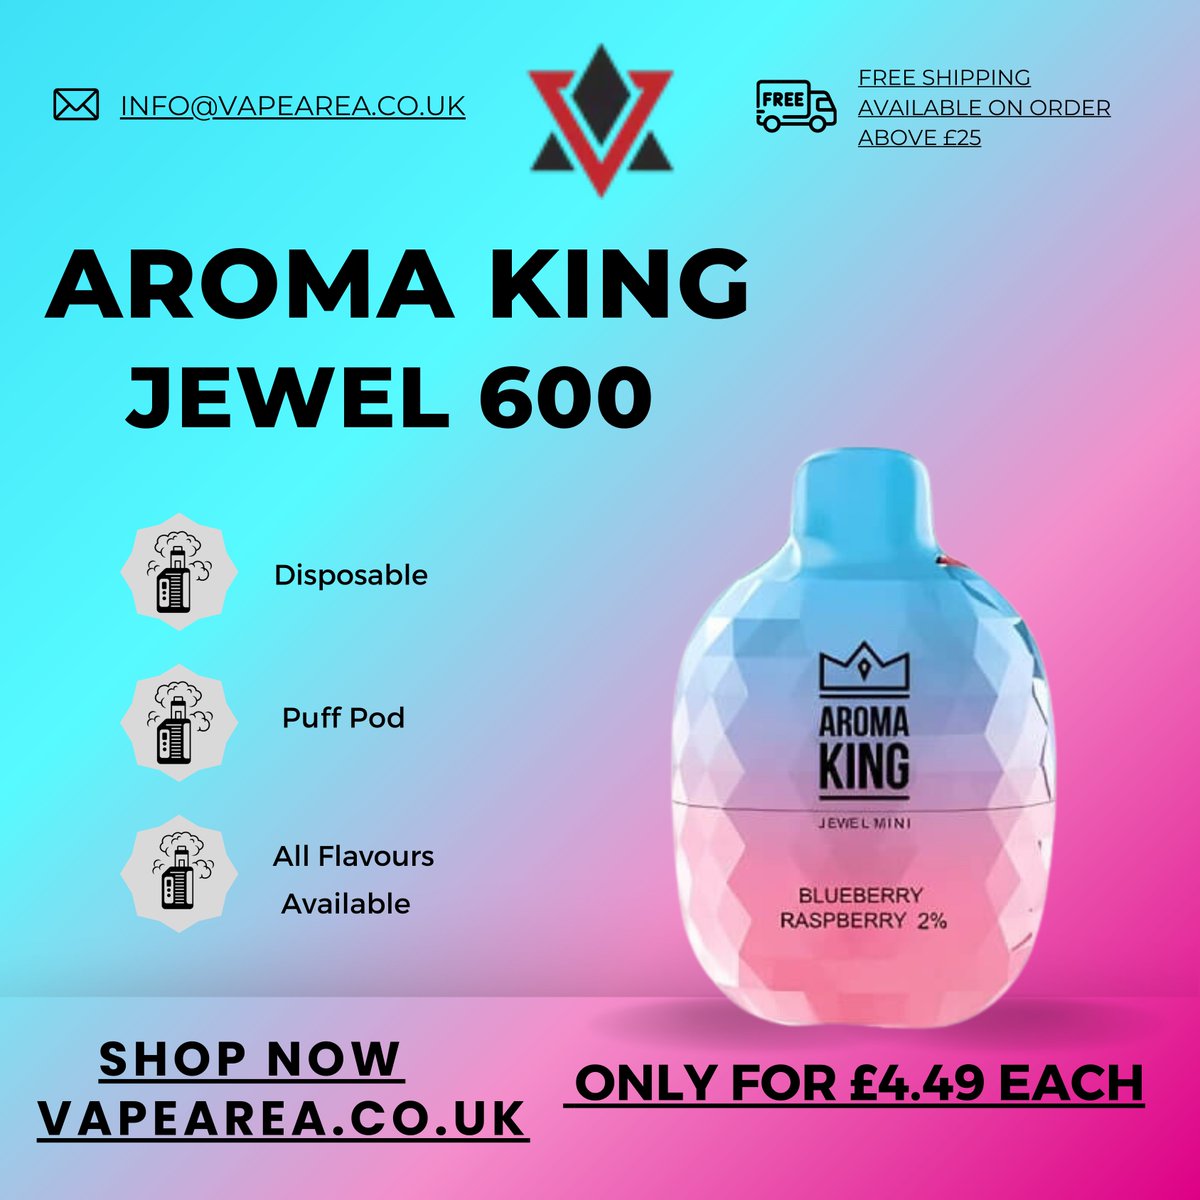 Aroma King Jewel Mini 600 Puff Disposable Pod Puff Bar Device
All Flavours Available on Vapearea.co.uk
#vapepodsystem #vapeonlineshop #vapeshopuk #vapeshopnearme #vapeeurope #vapepromoter #vapers #vapersofinstagram #vapeworldwide #vapingislife #vapepromo #vapestore